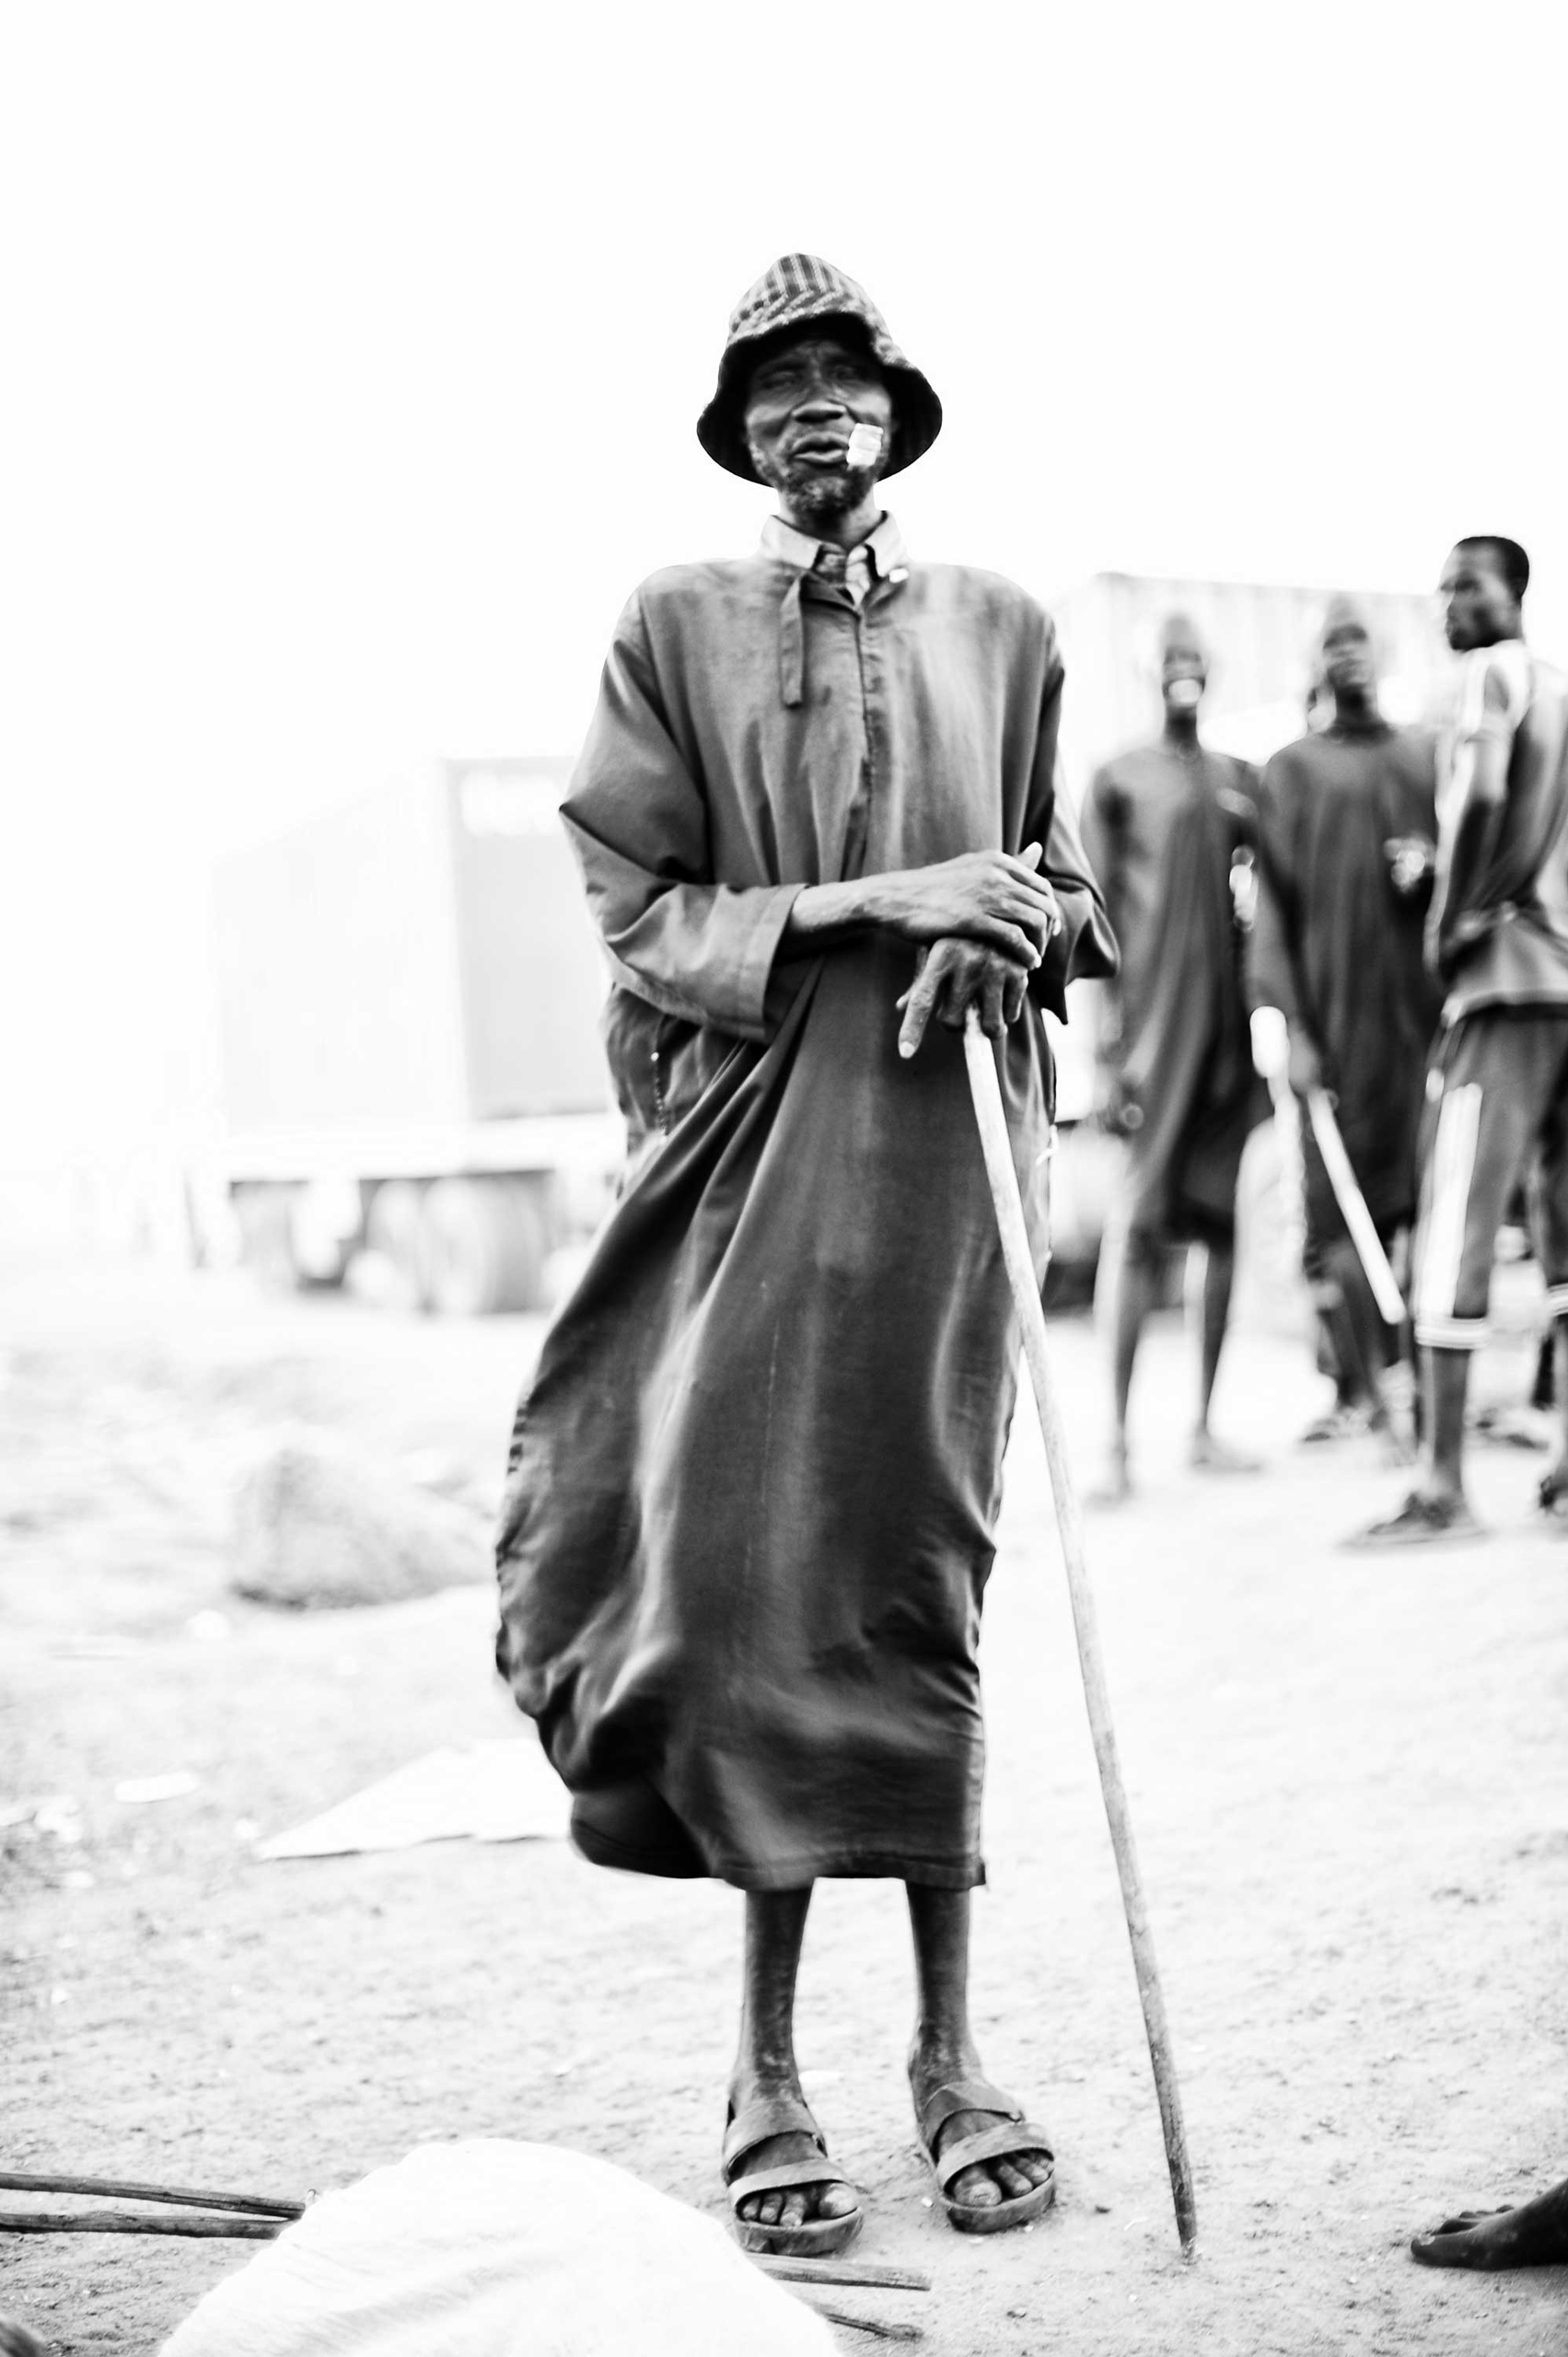 ugo-borga-south-soudan-portraits-2016-black-and-white-05